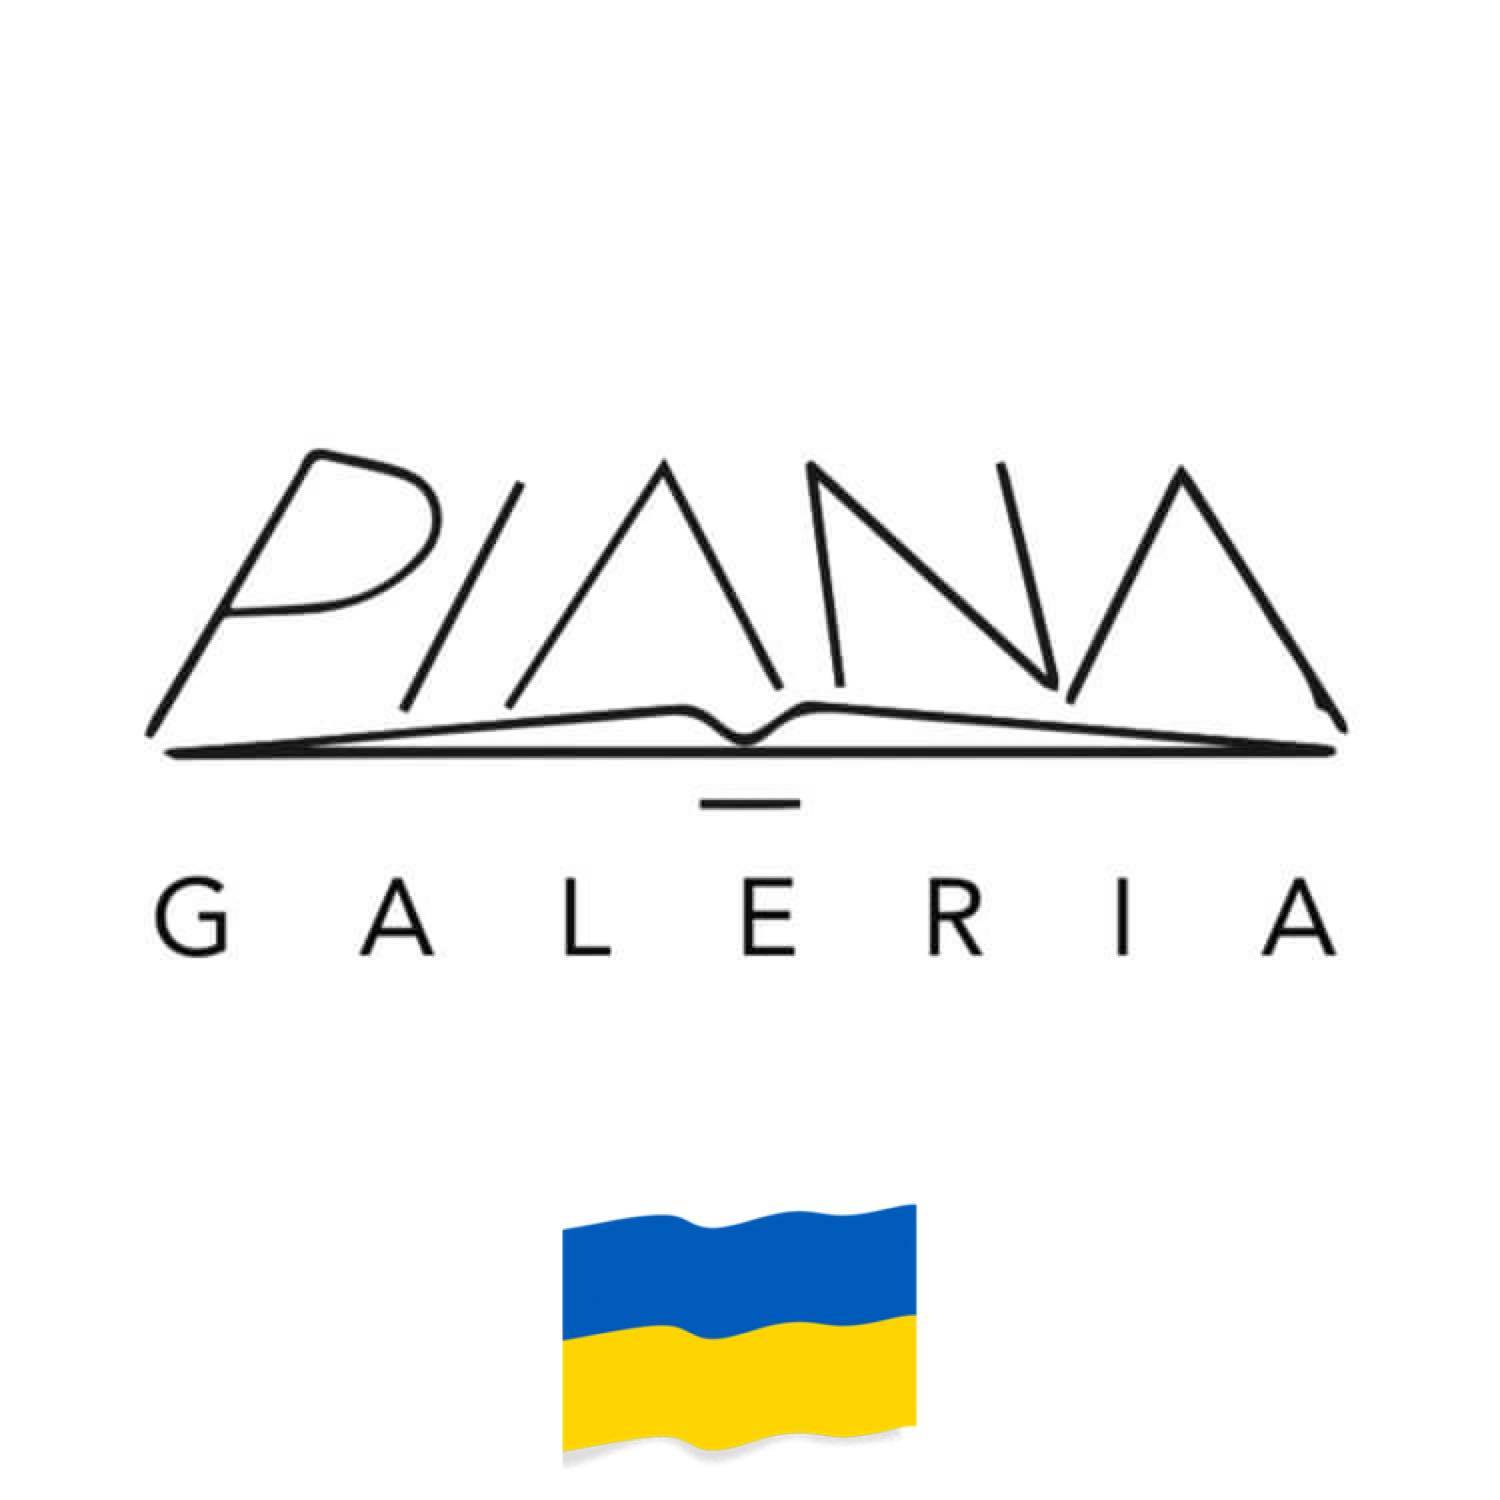 Piana Gallery